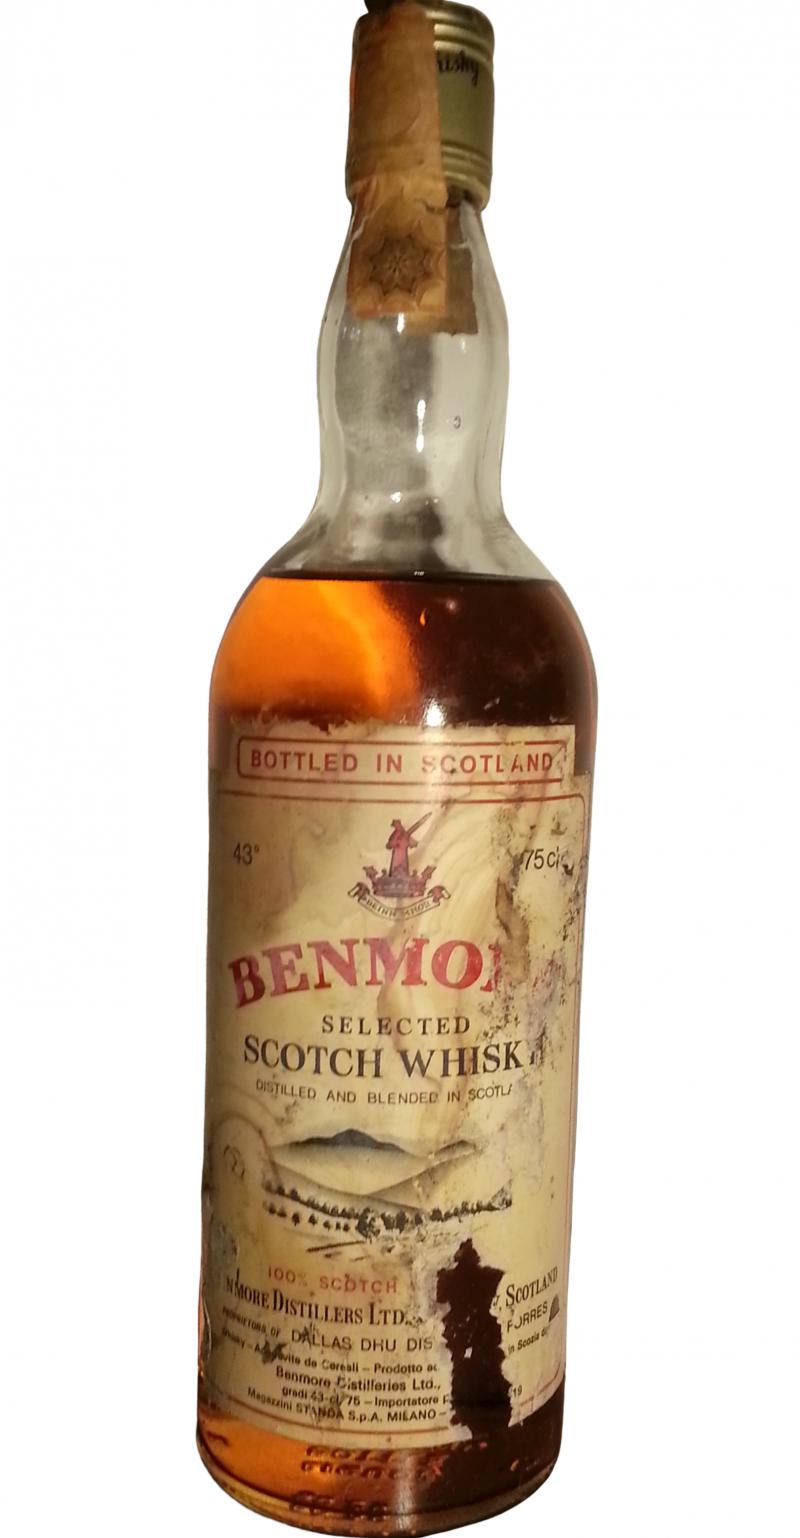 Benmore Selected Scotch Whisky Magazzini Standa S.p.A. Milano 43% 750ml